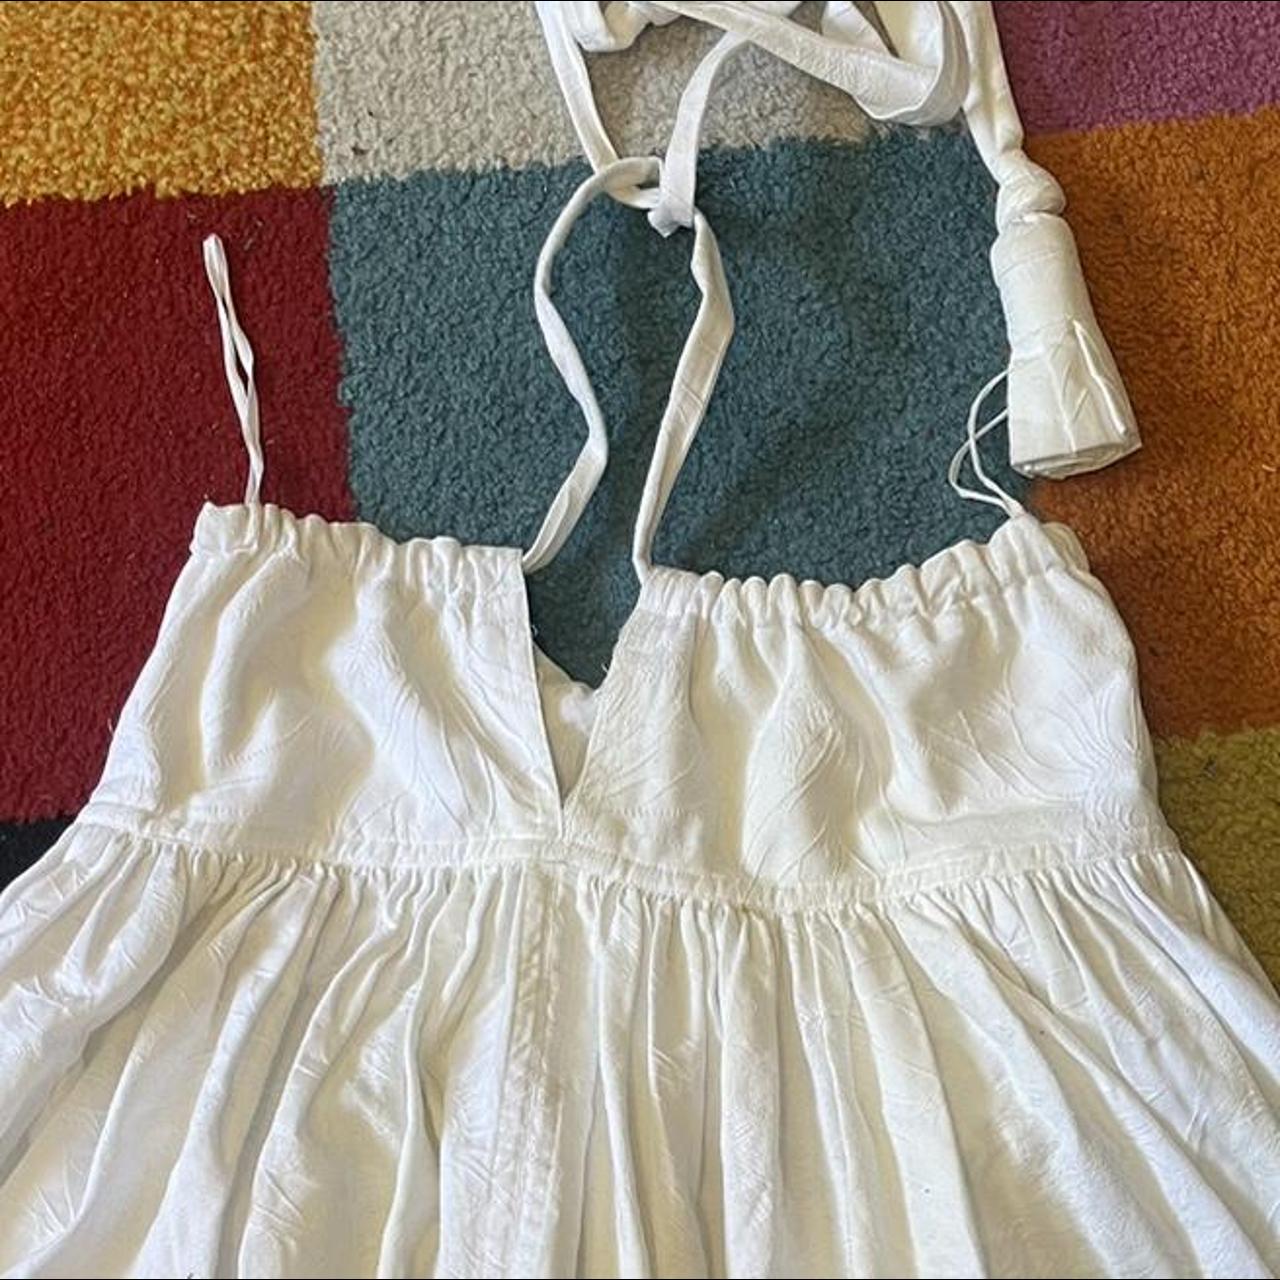 Jil Sander Women's White and Cream Dress (4)